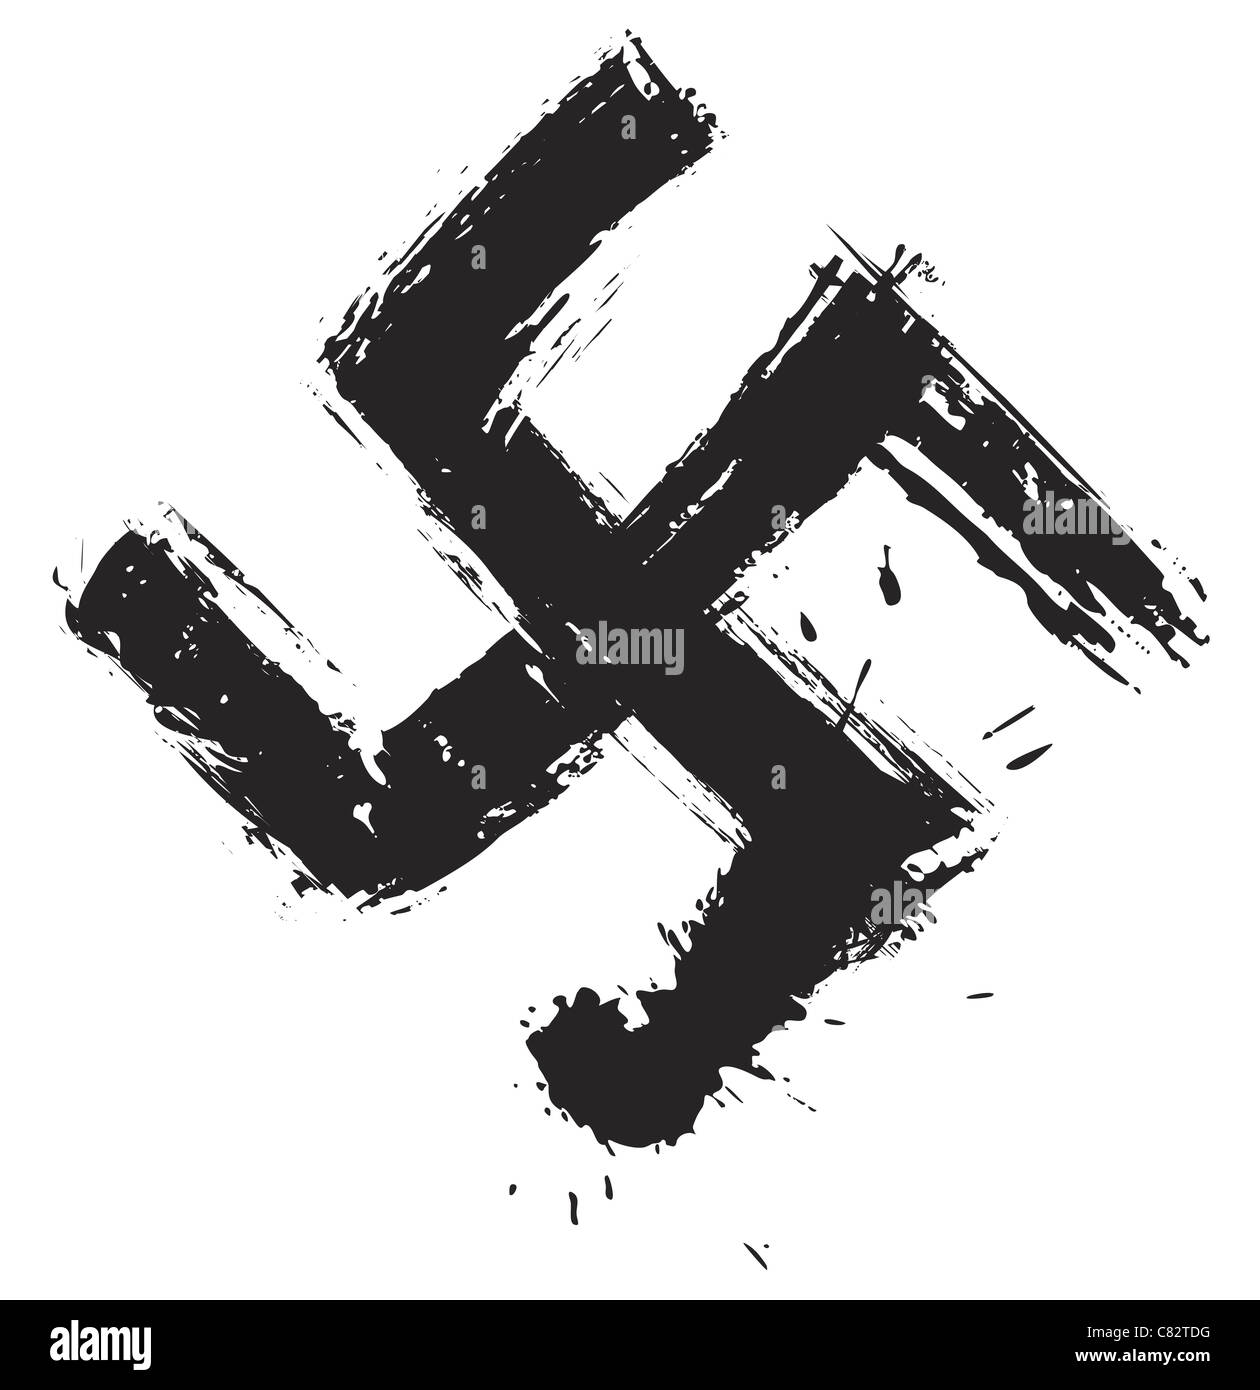 Swastika symbol Stock Photo